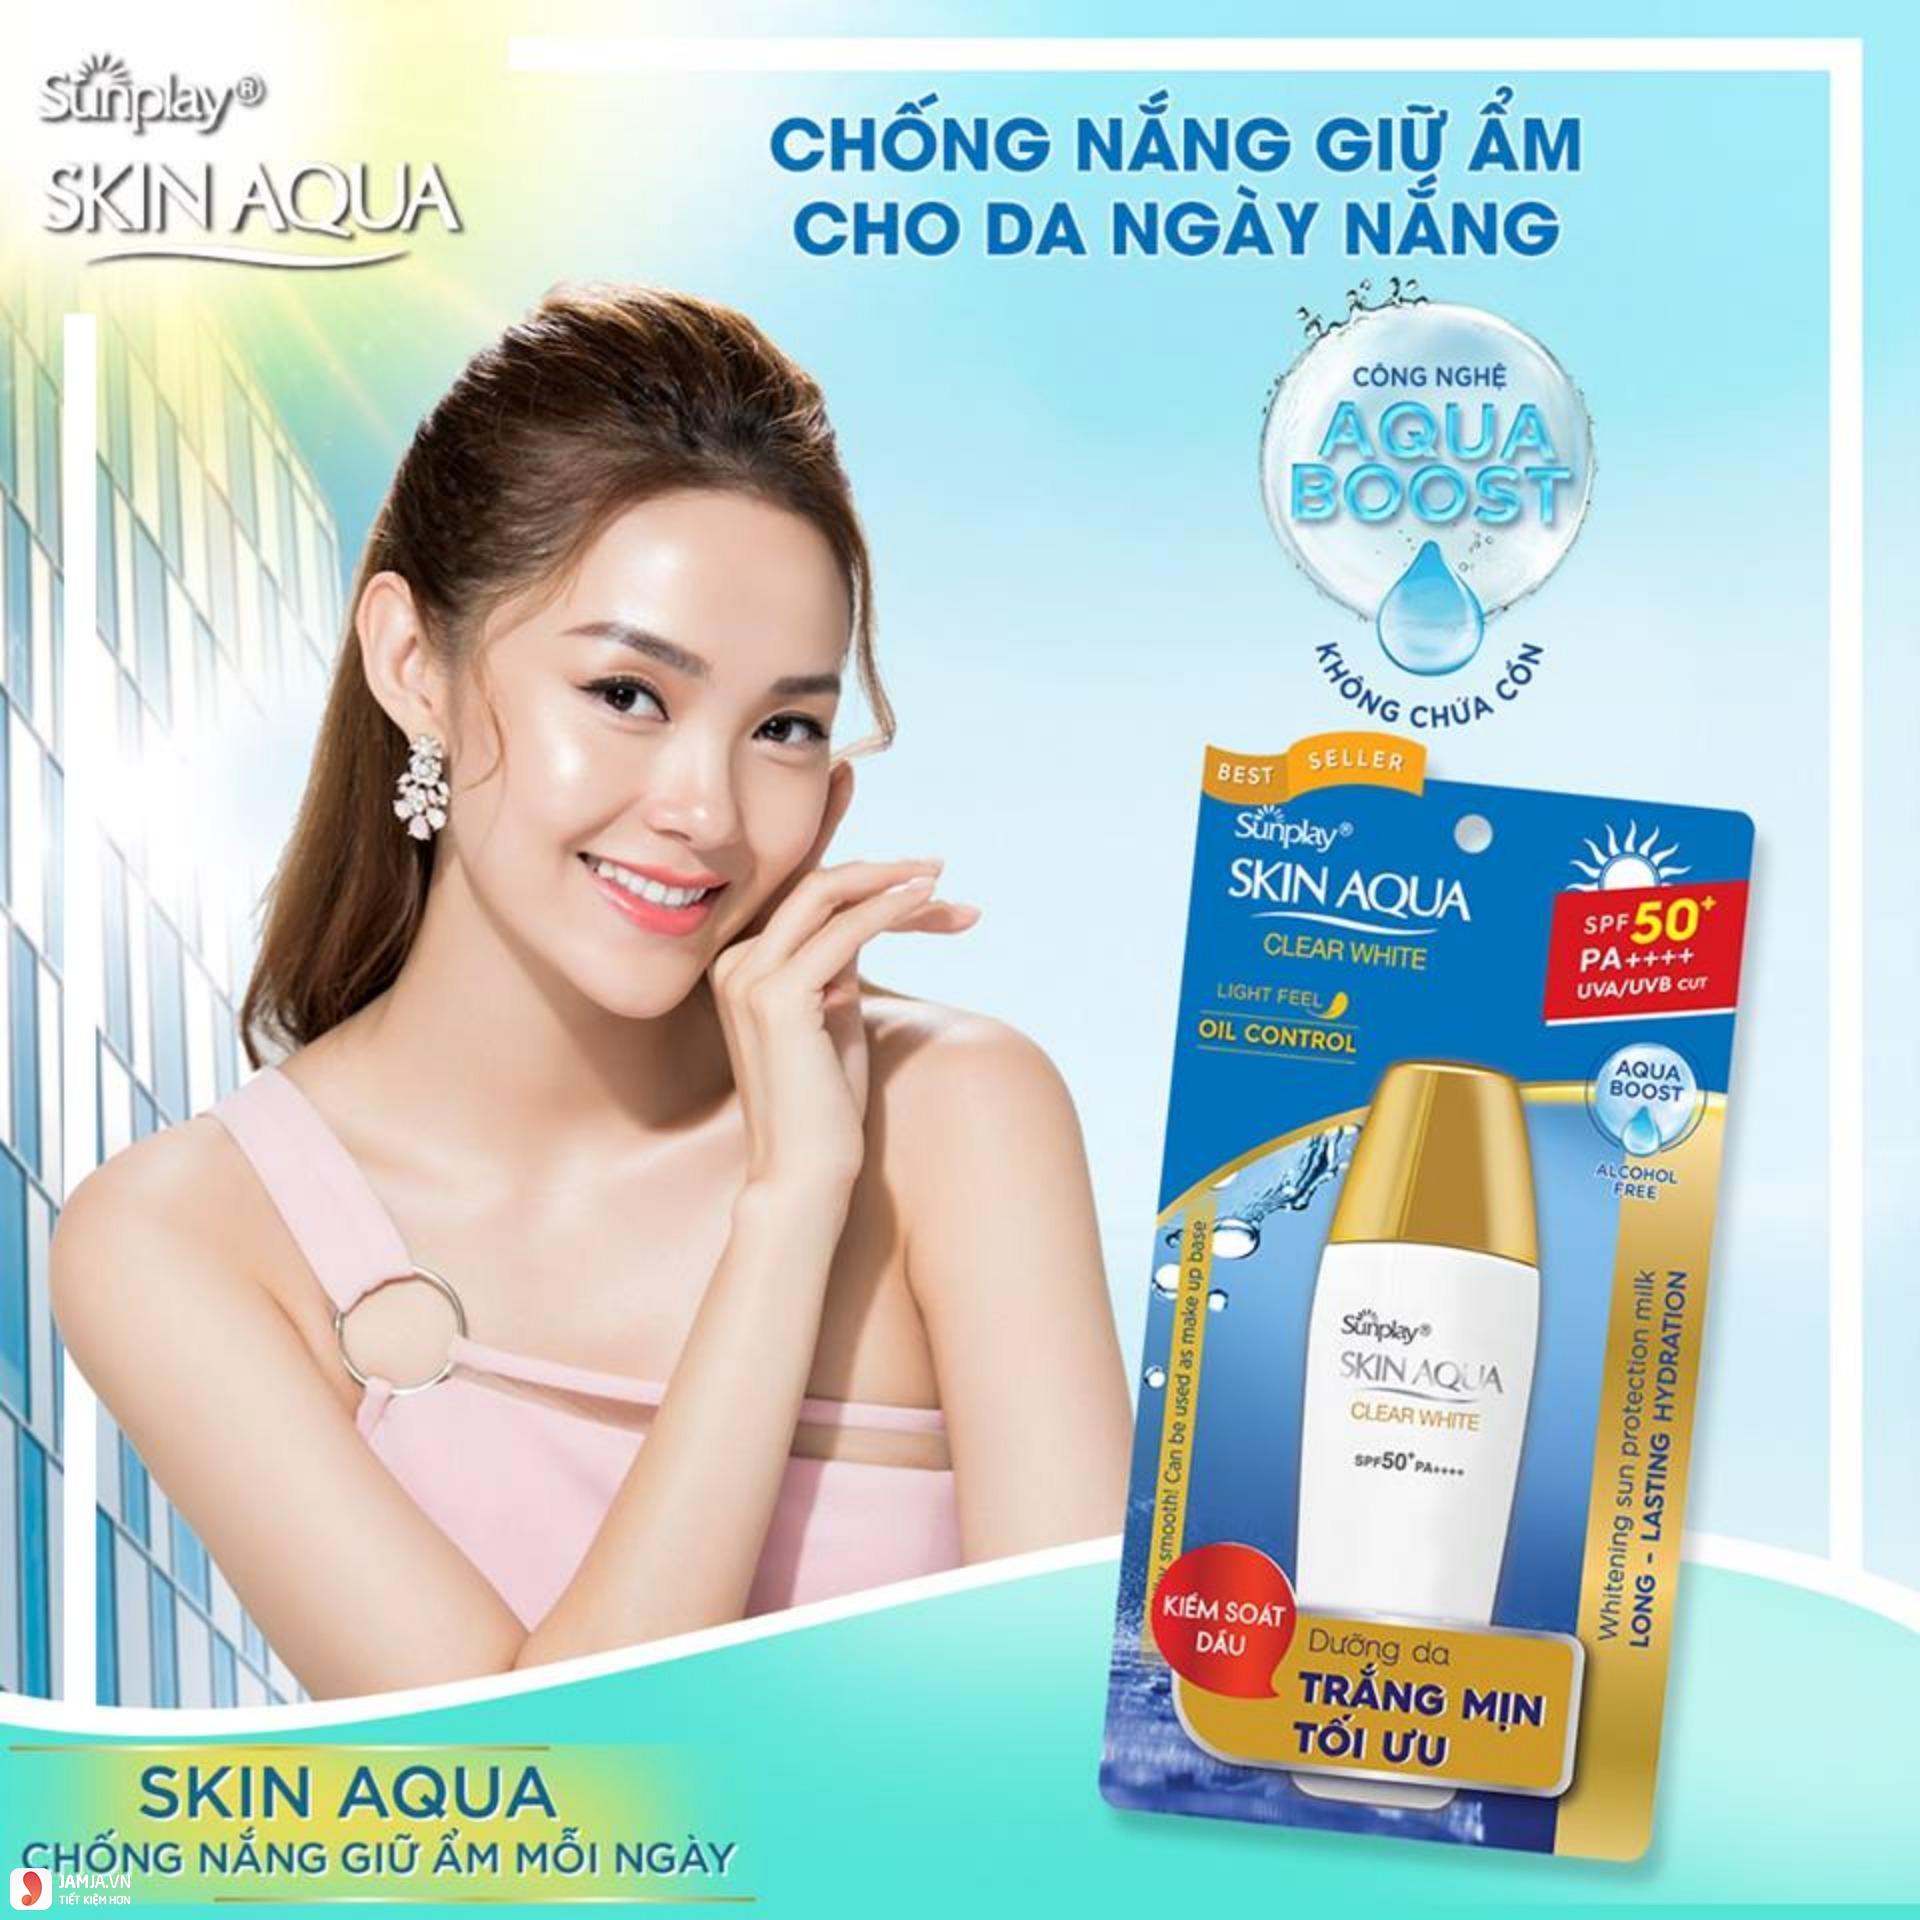 Kem chống nắng Skin Aqua Clear White 1